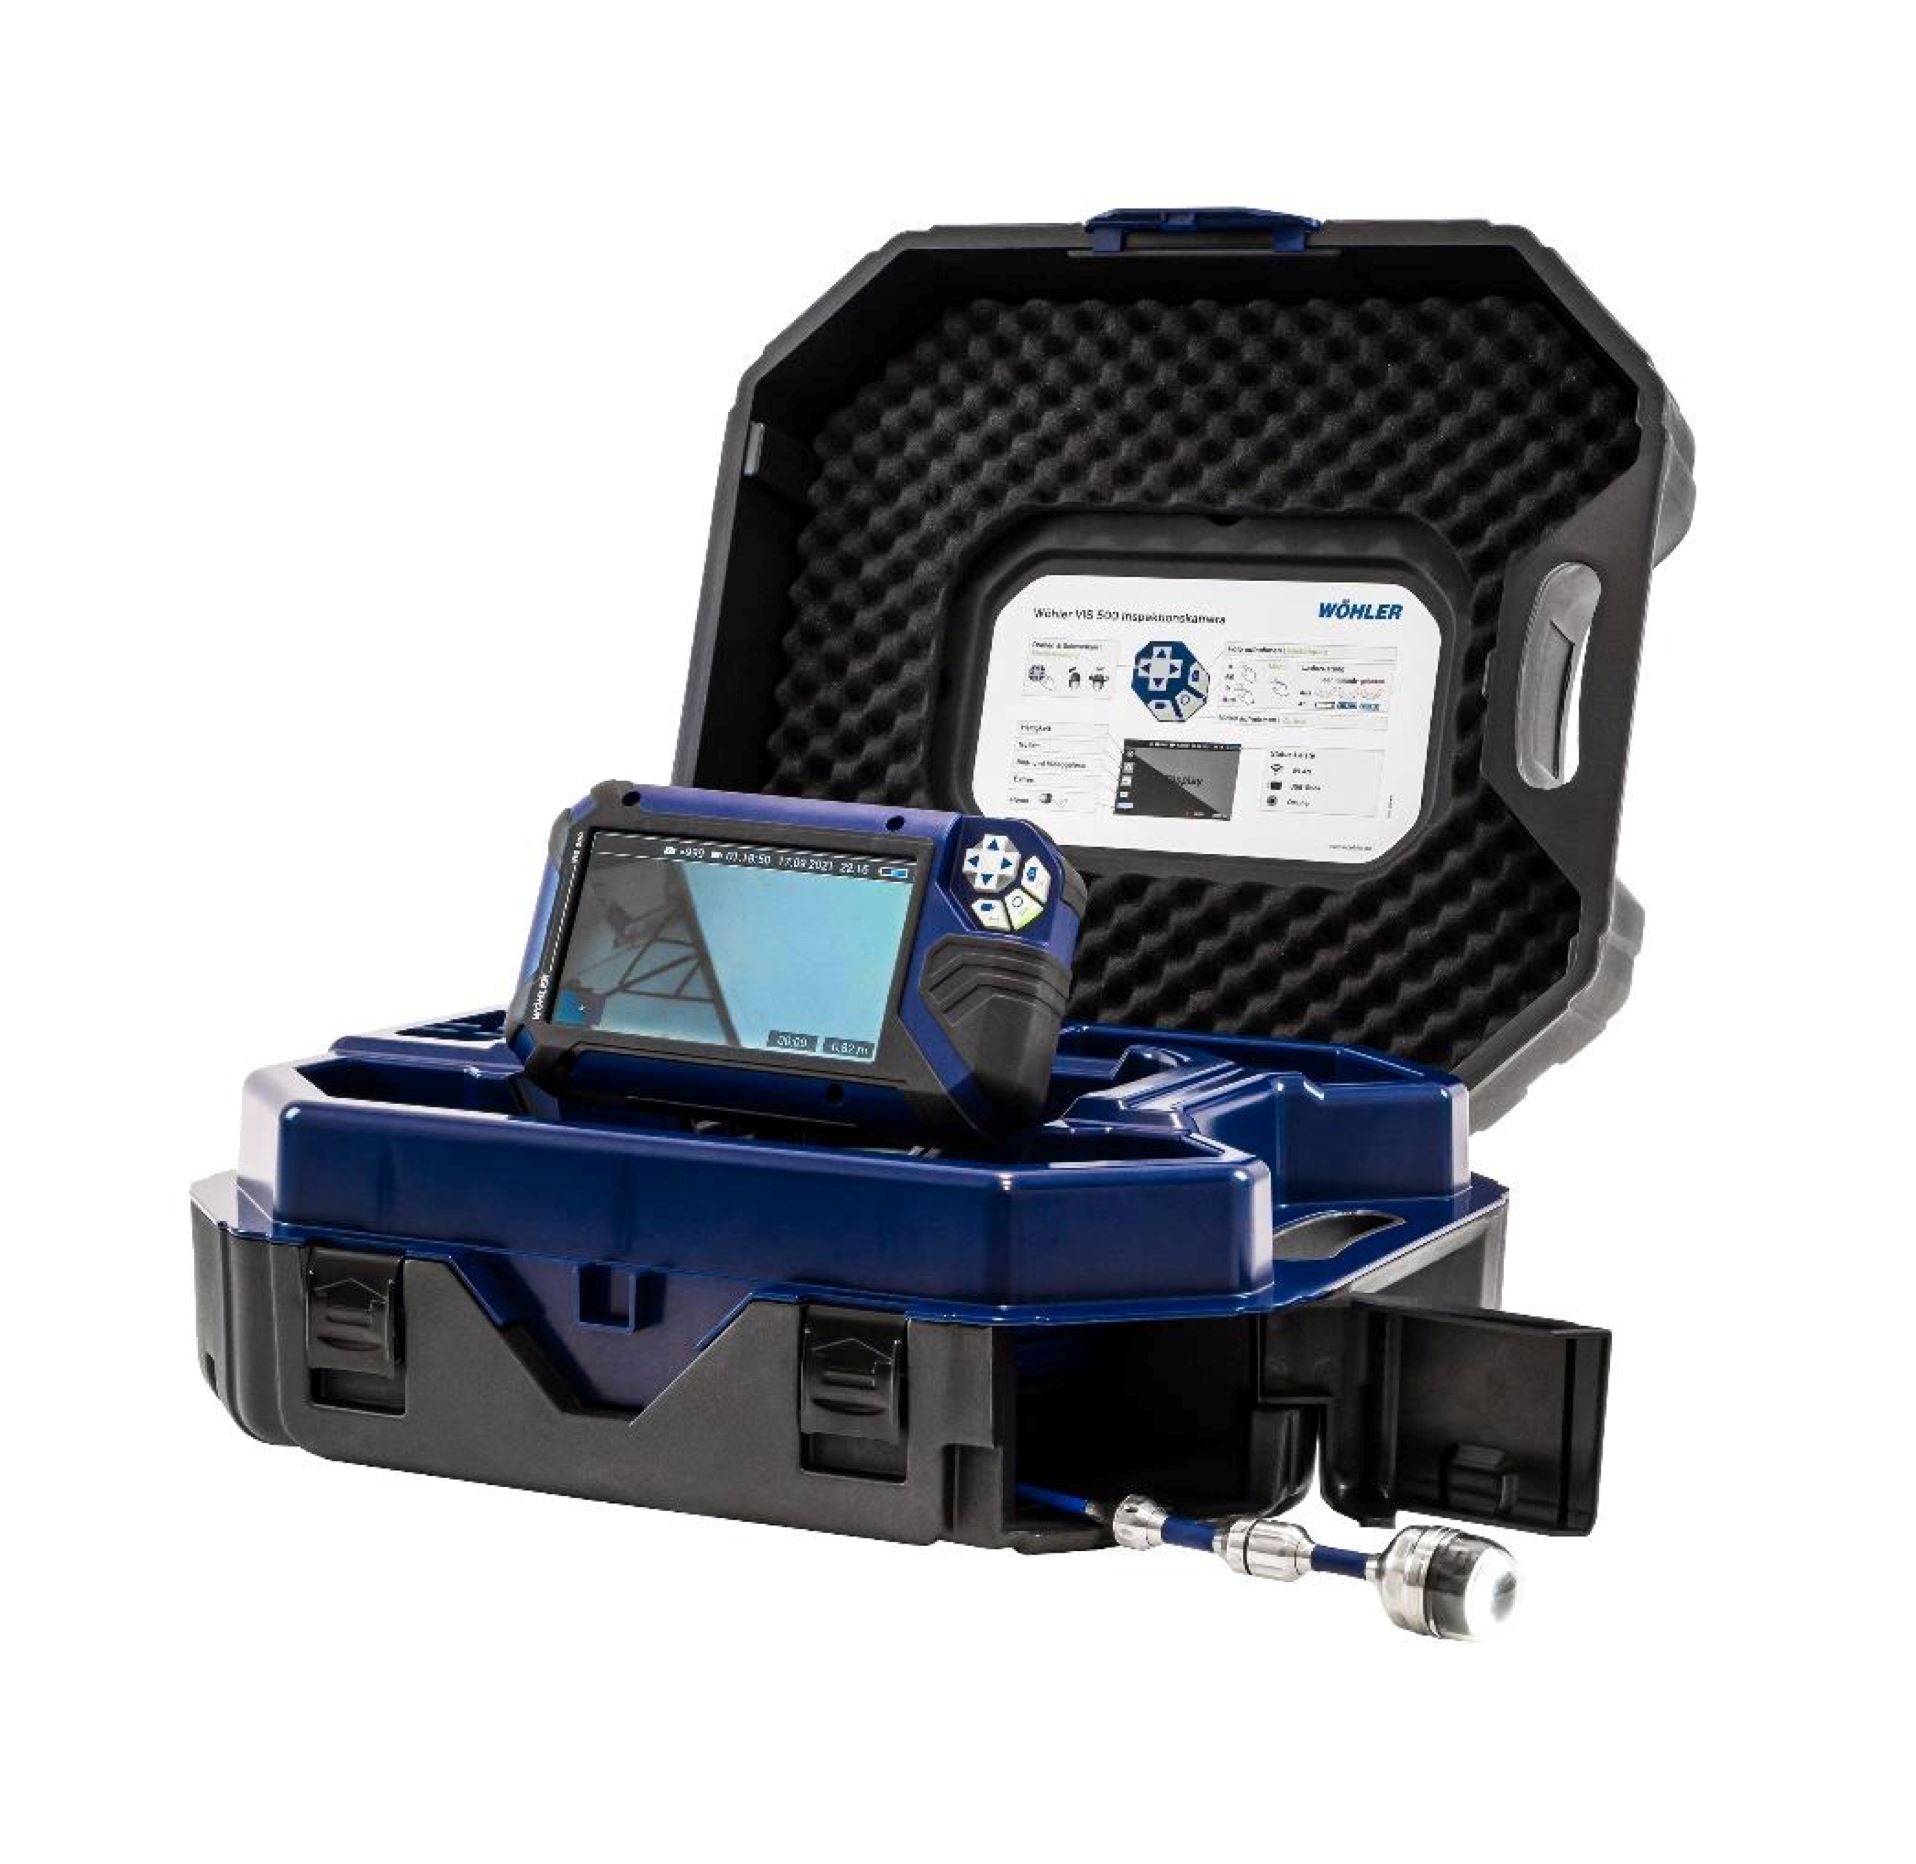 Wohler VIS 500 Inspection Camera System w/ 1.5 Head - 11507 - InterTest, Inc.